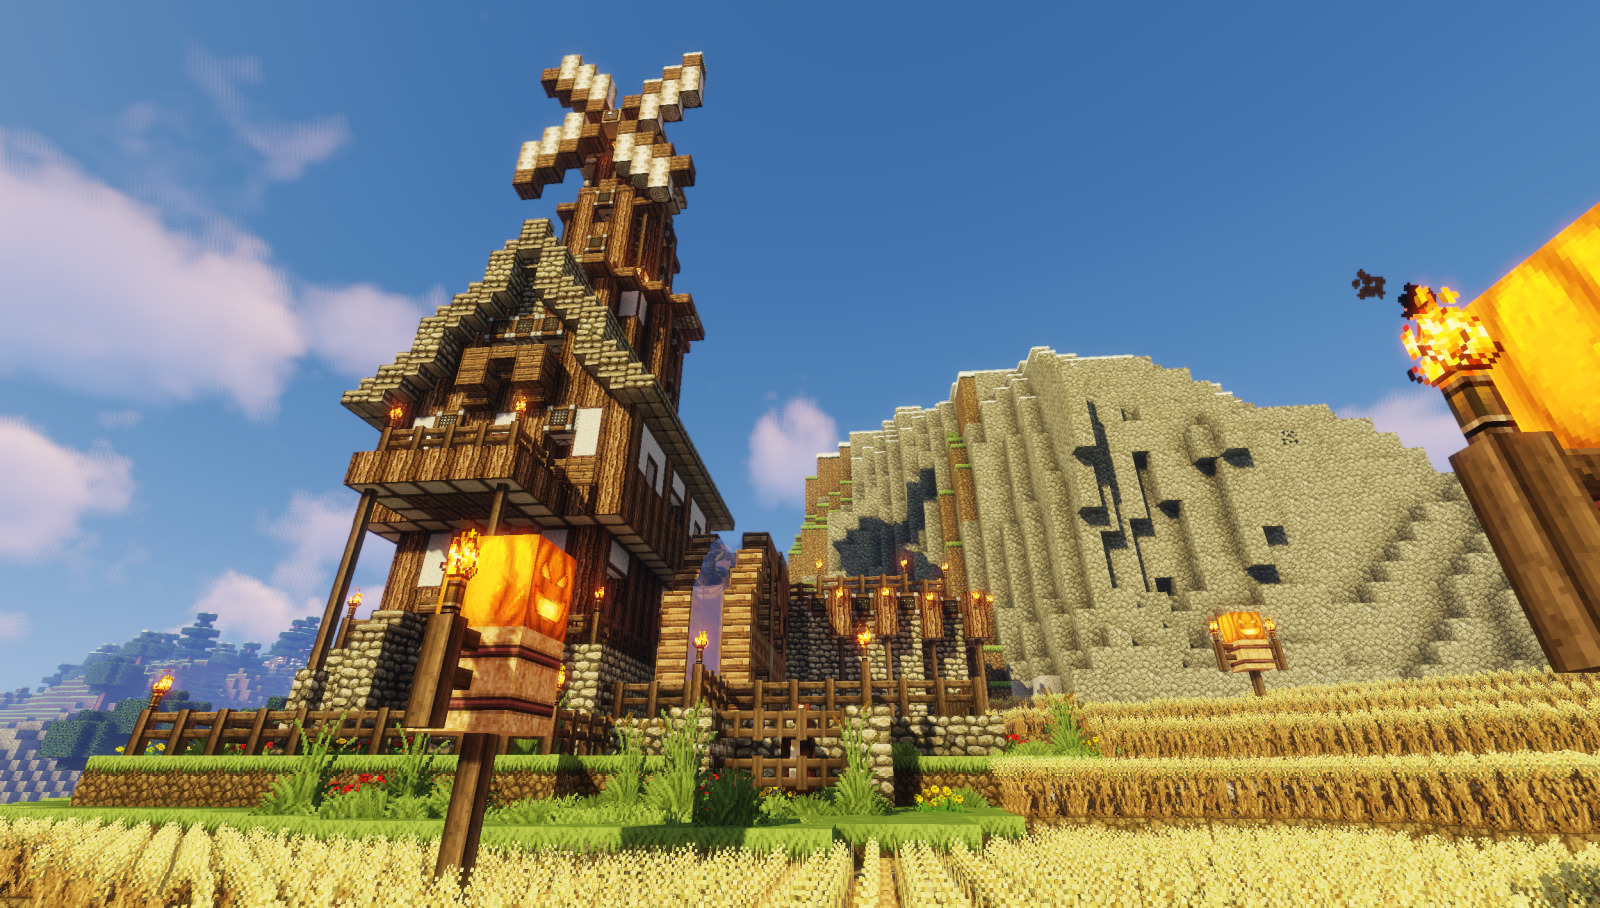 Minecraft Mill - Original image